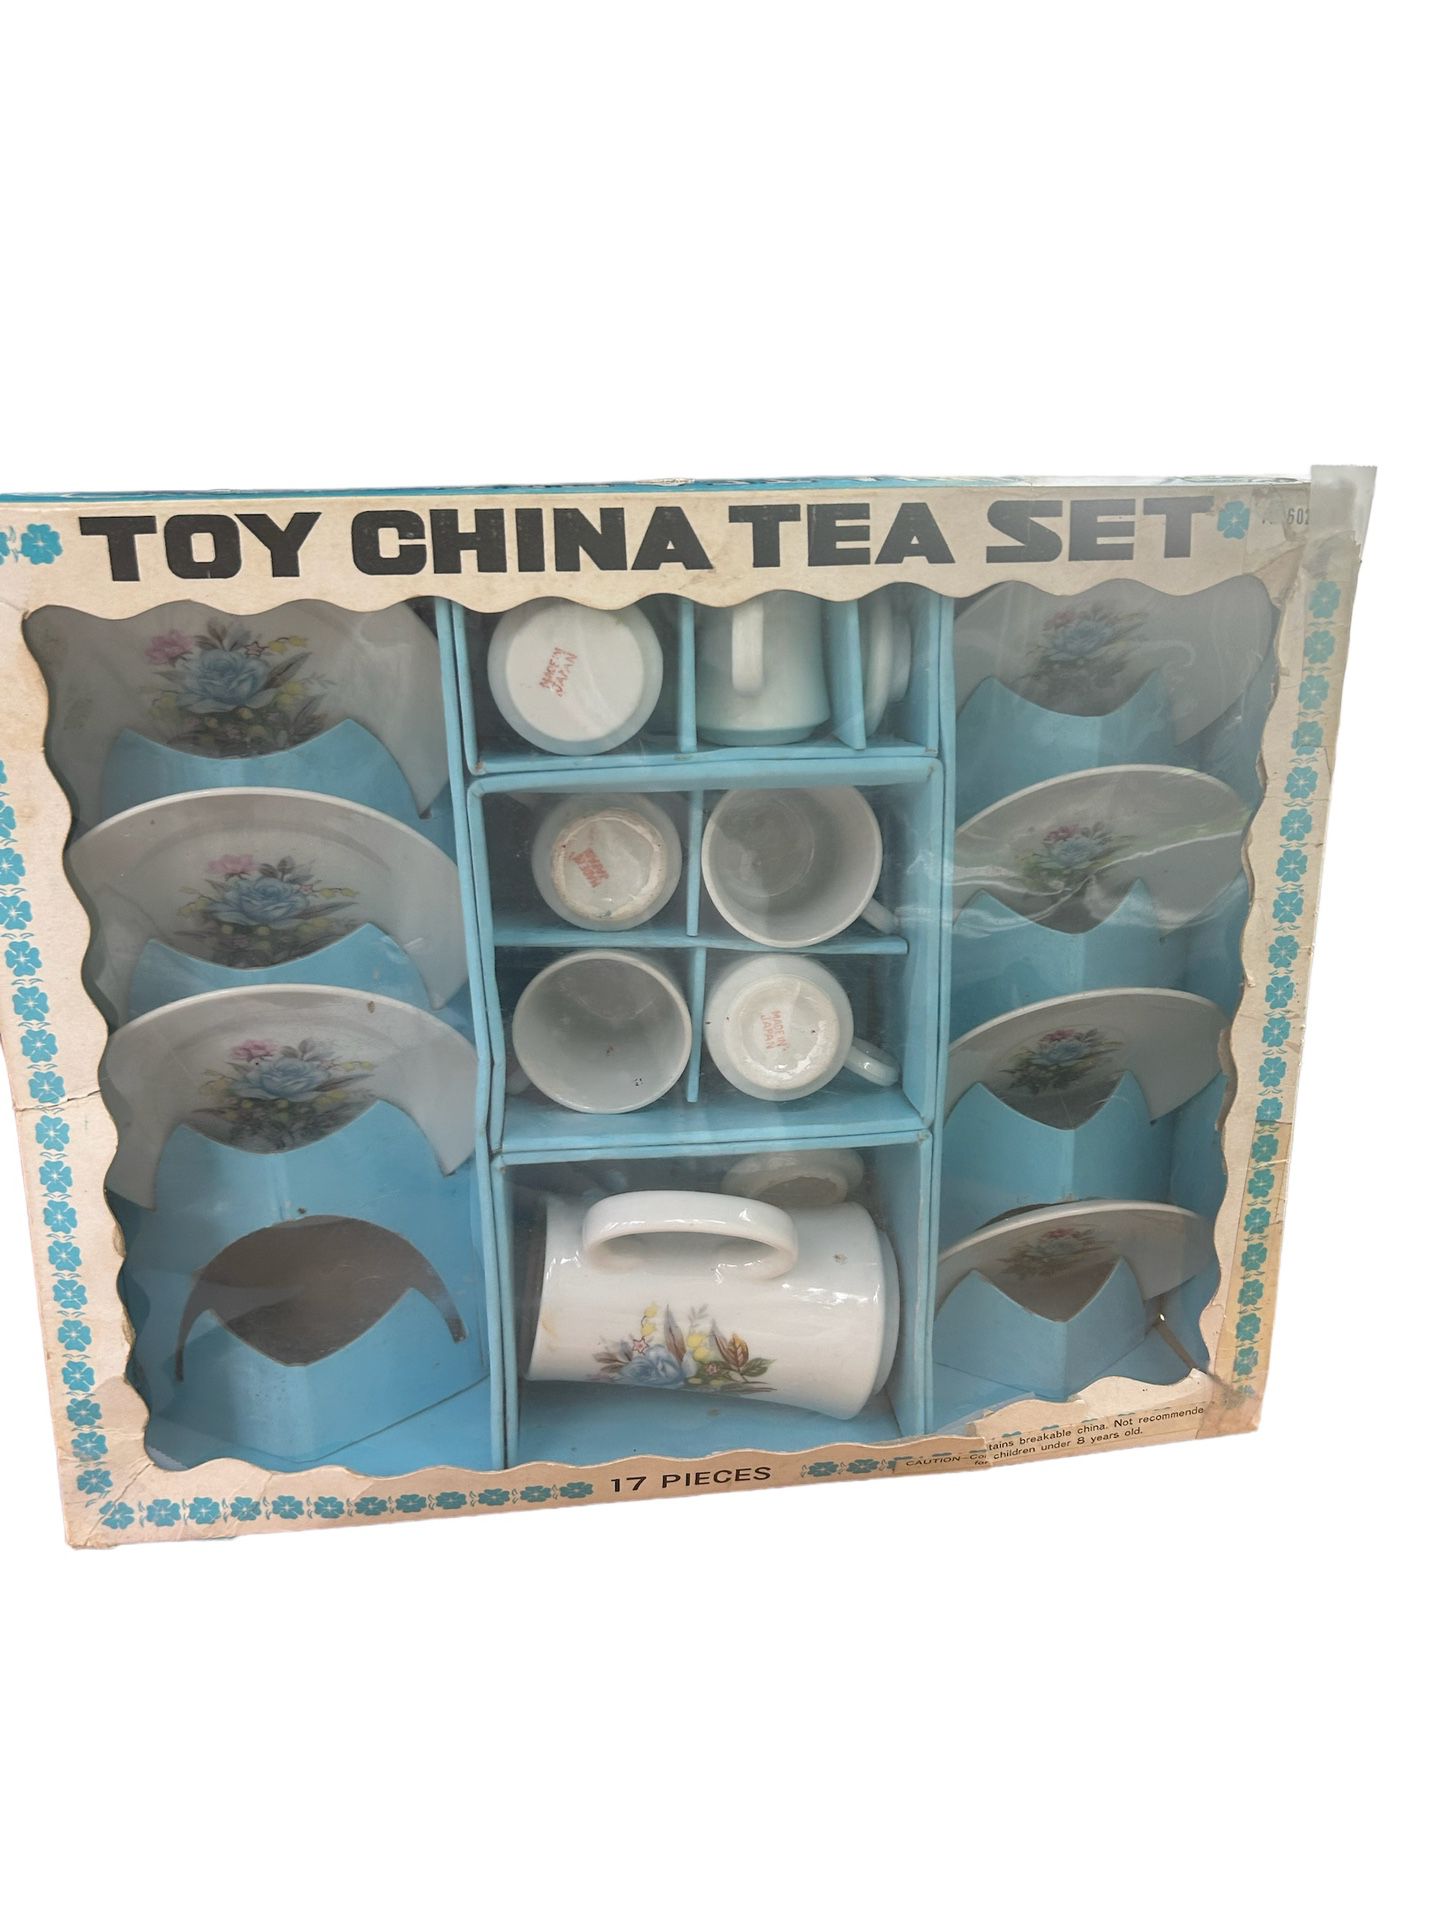 Vintage Toy China Tea Set